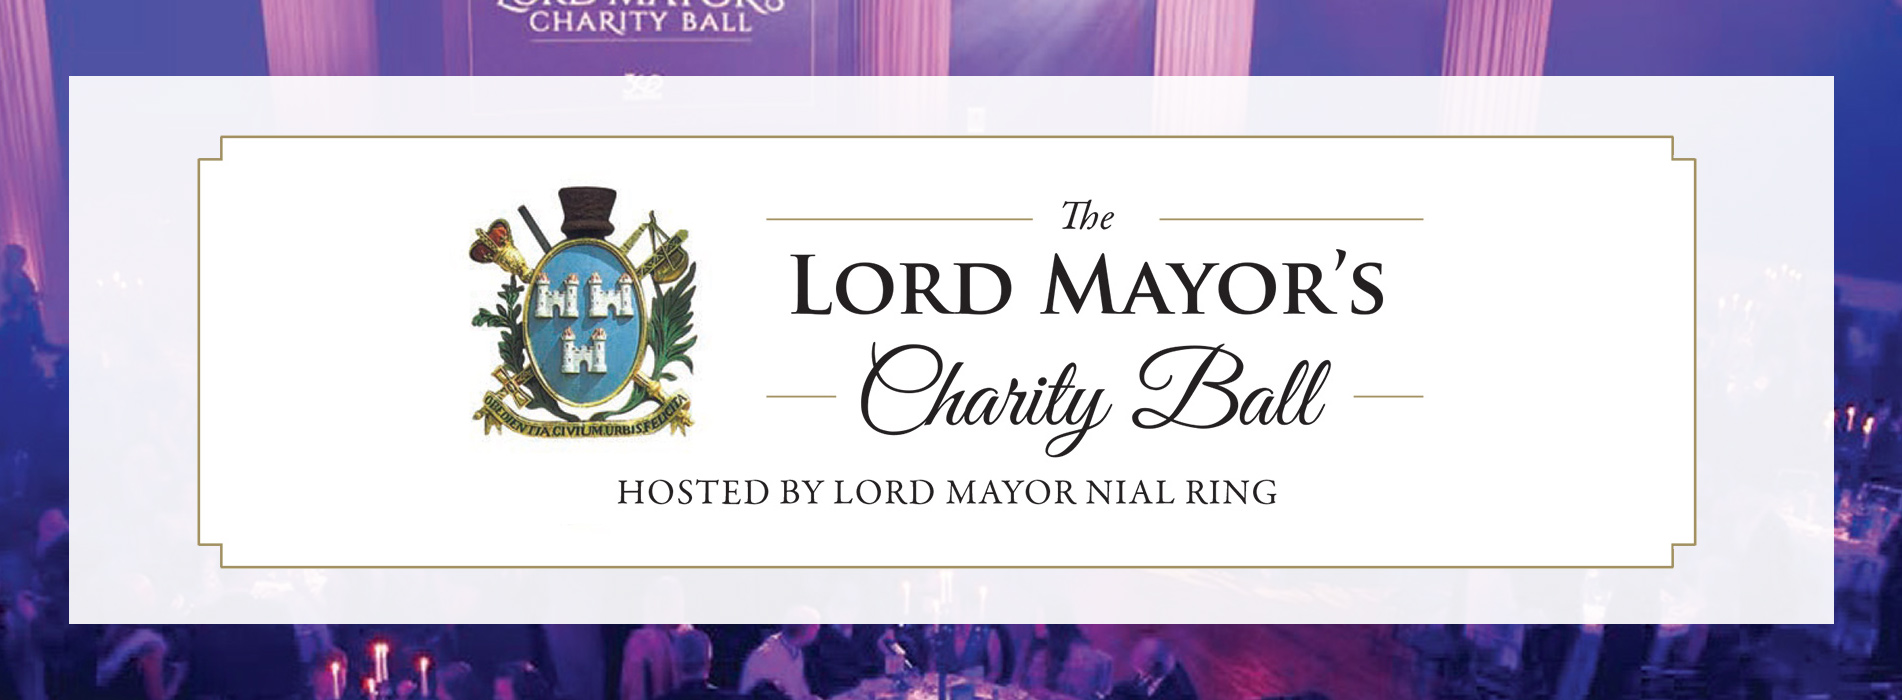 The Lord Mayor’s Charity Ball 2018